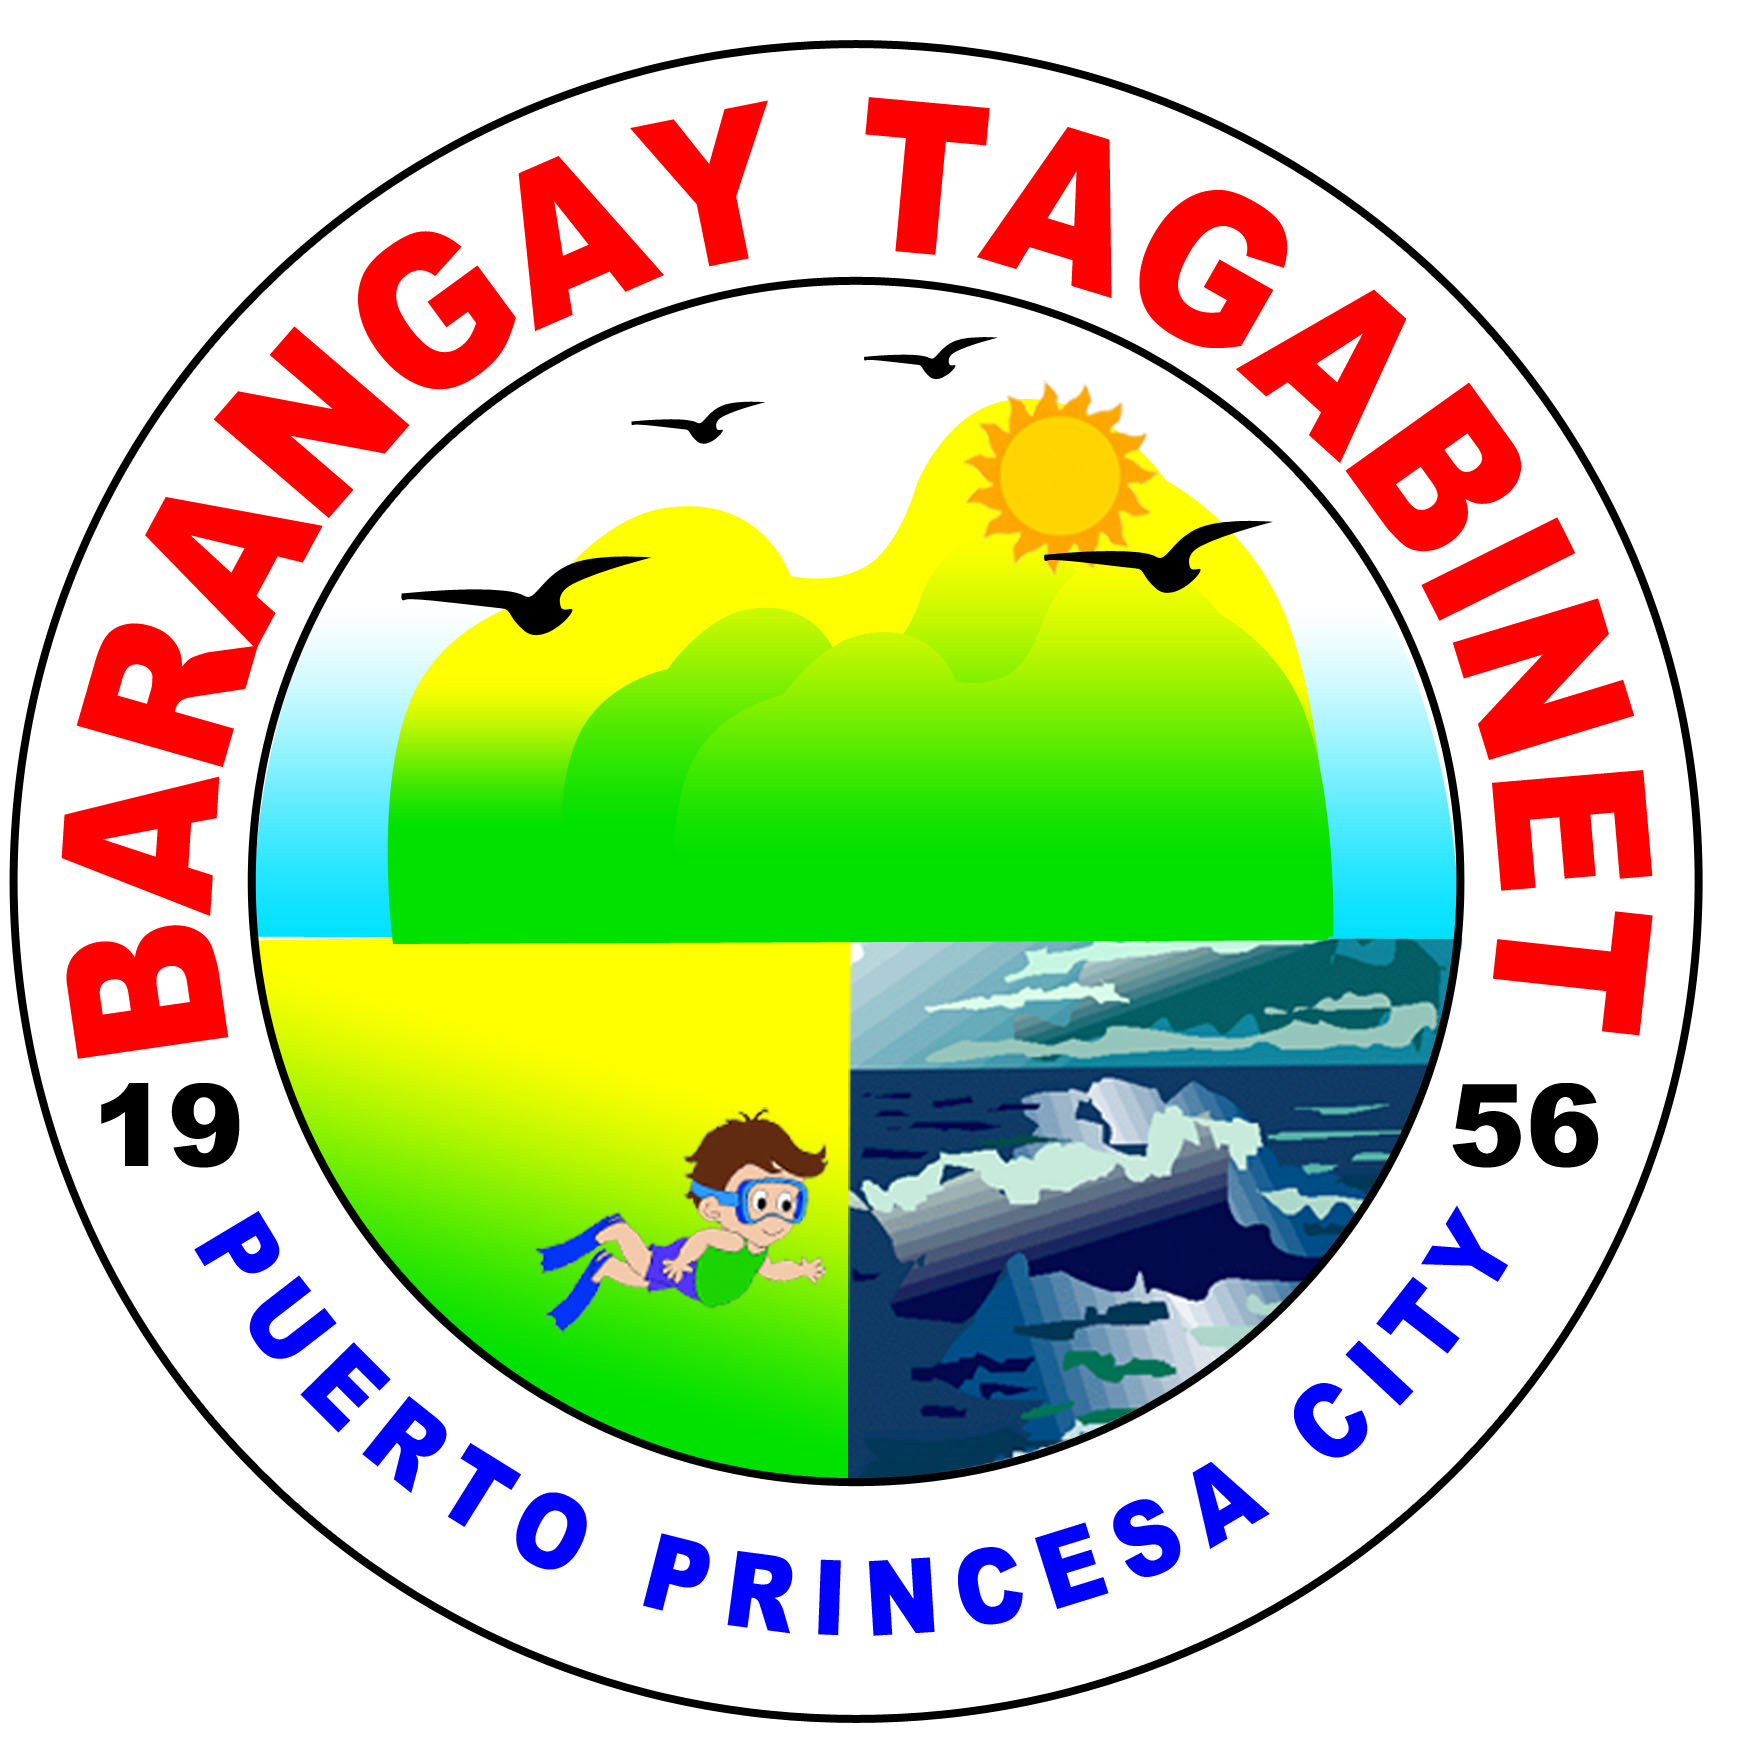 Barangay tagabinet logo